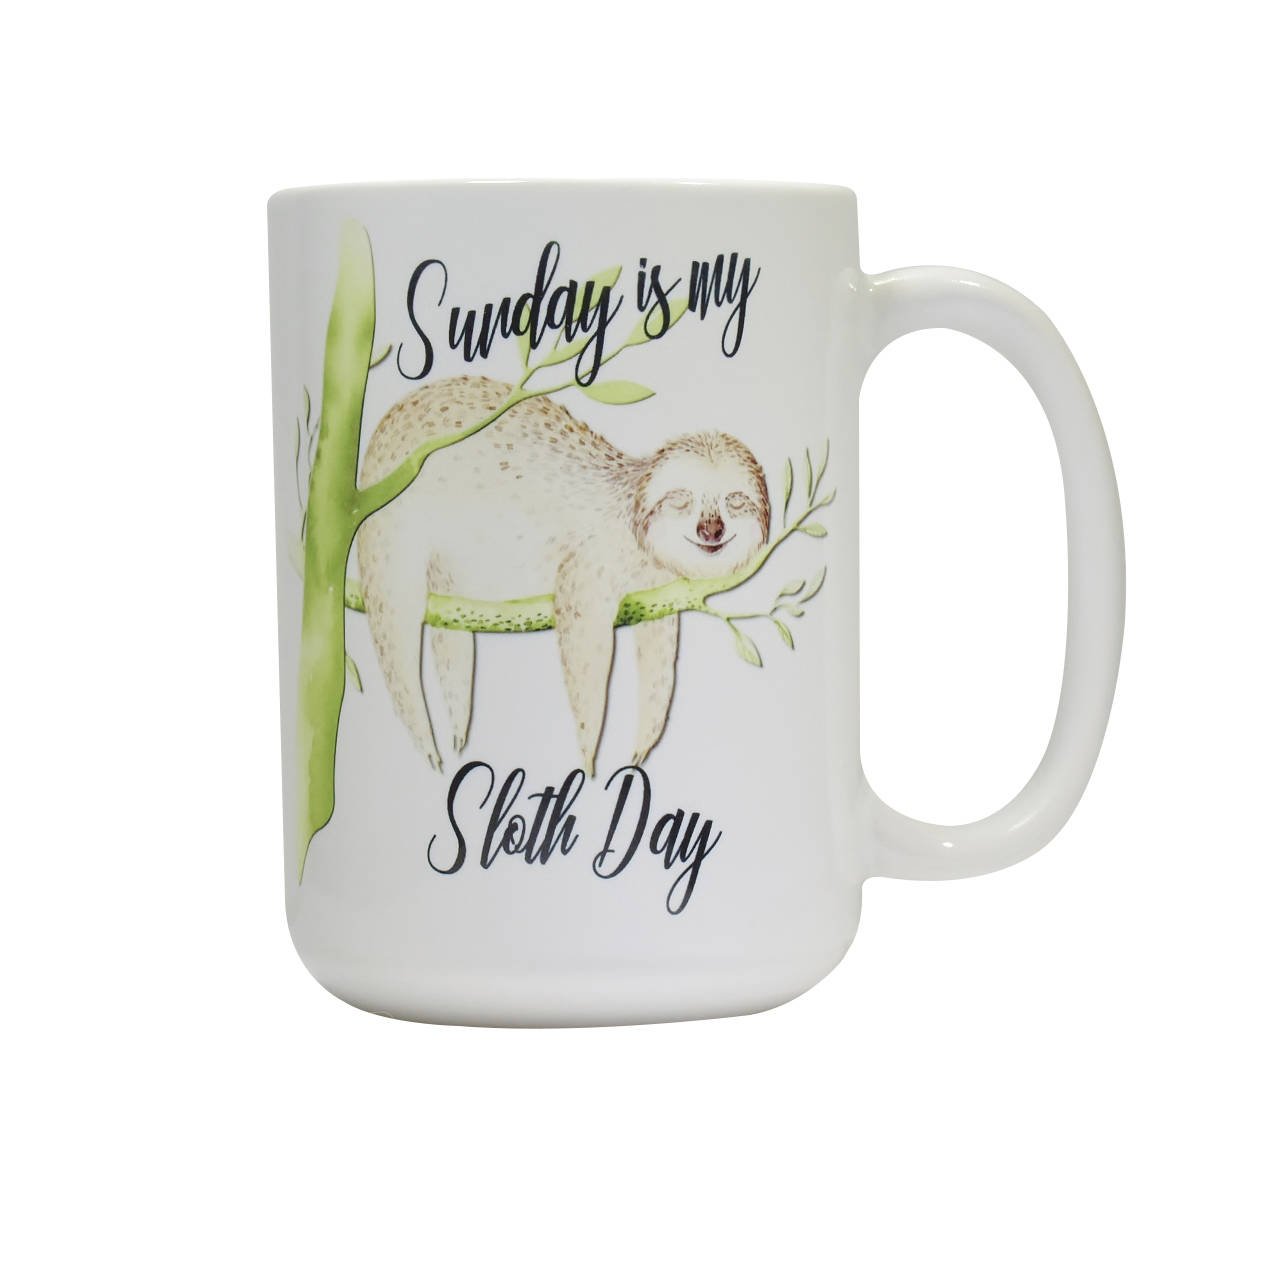 Sunday is my Sloth Day coffee mug | Friend Gift | Coworker Gift | Funny coffee Cup Gift | Sloth Gift | Gifts under 20 | Funny Handmade Gift